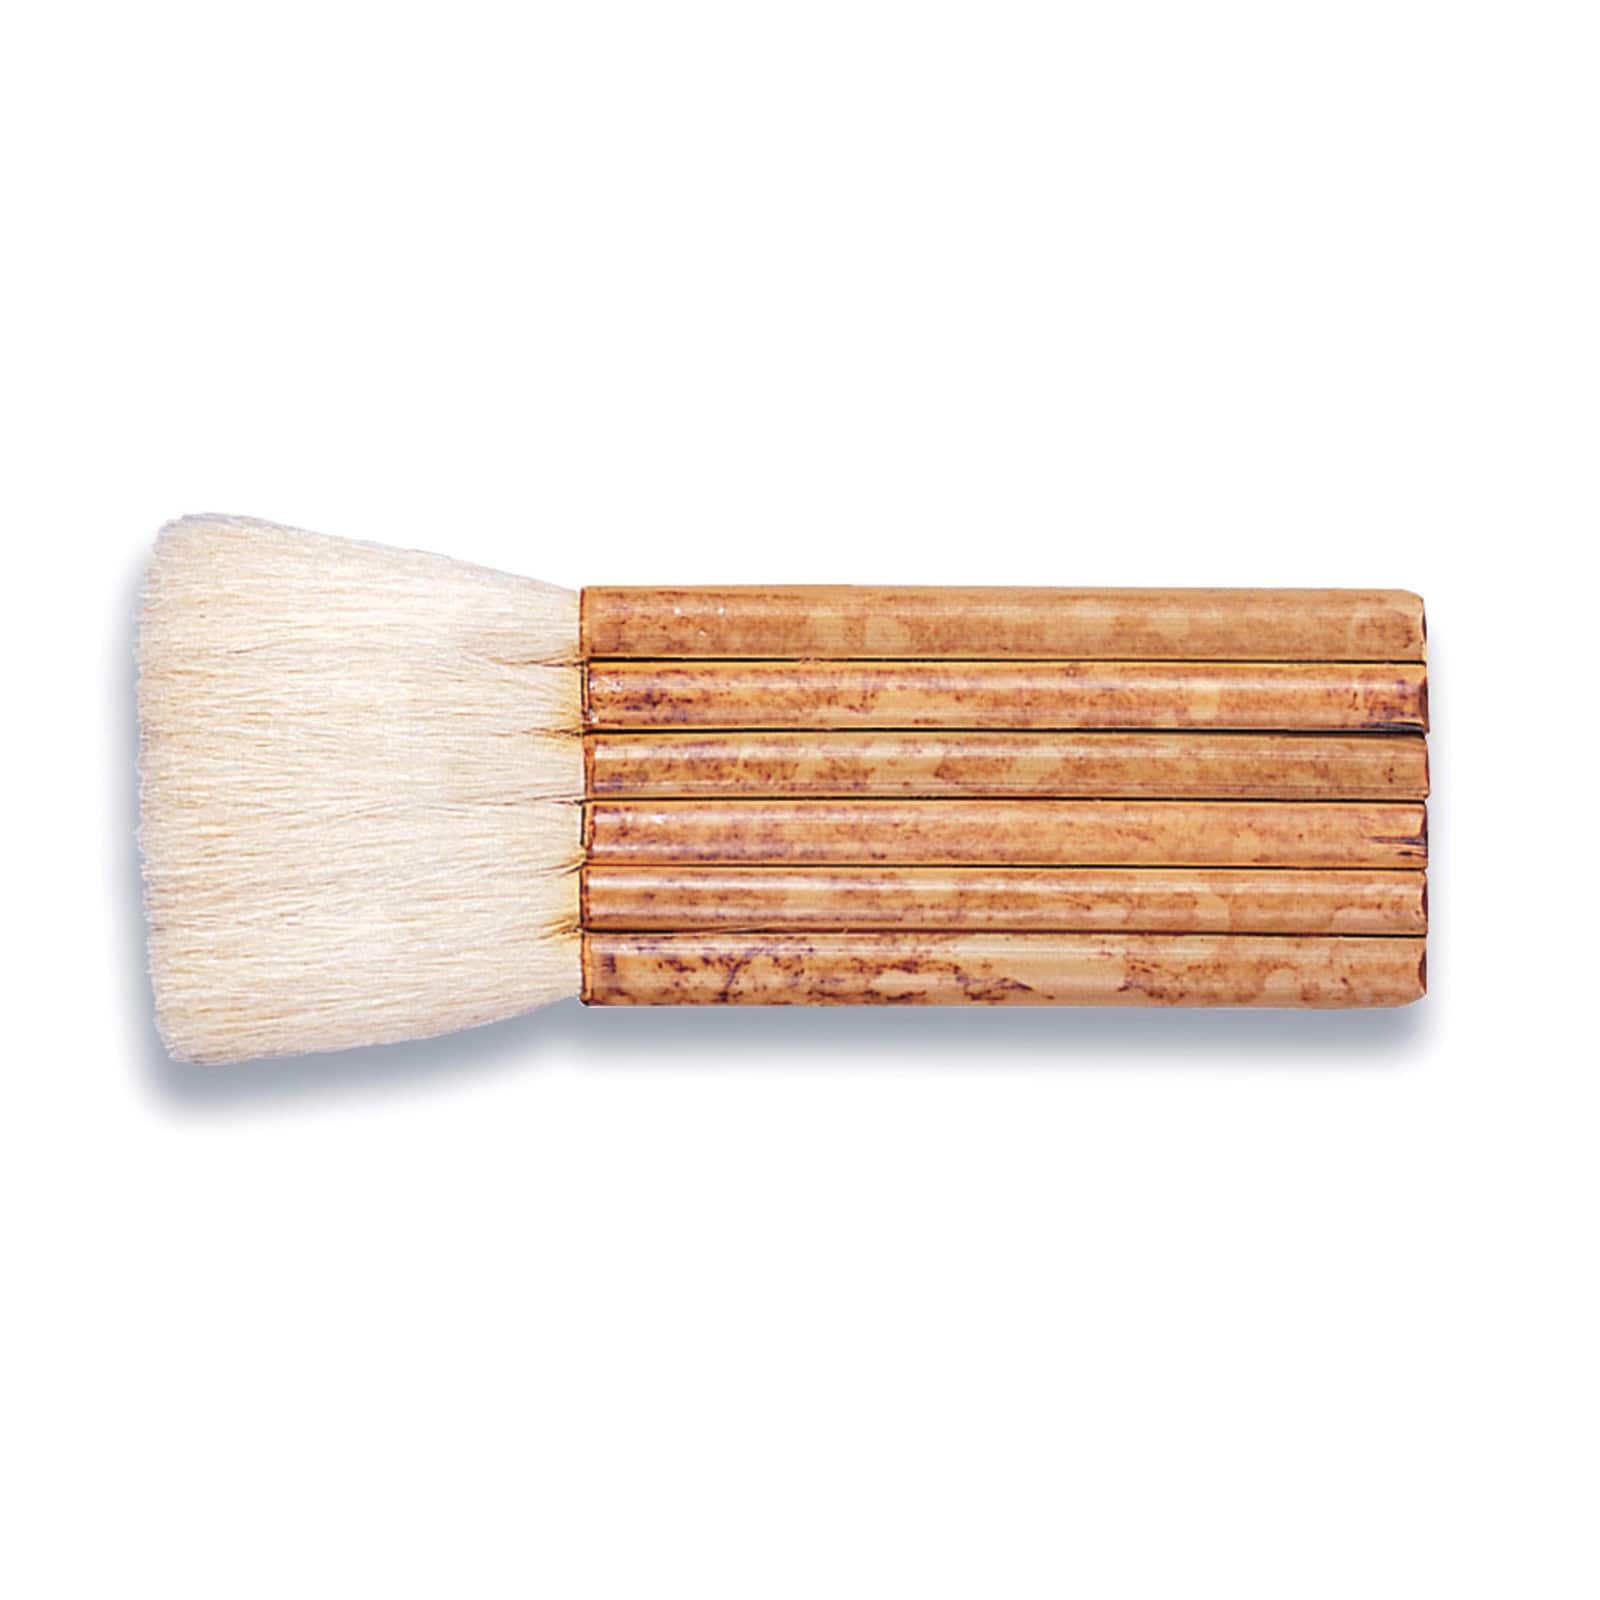 Hake Brushes, Watercolour Brushes